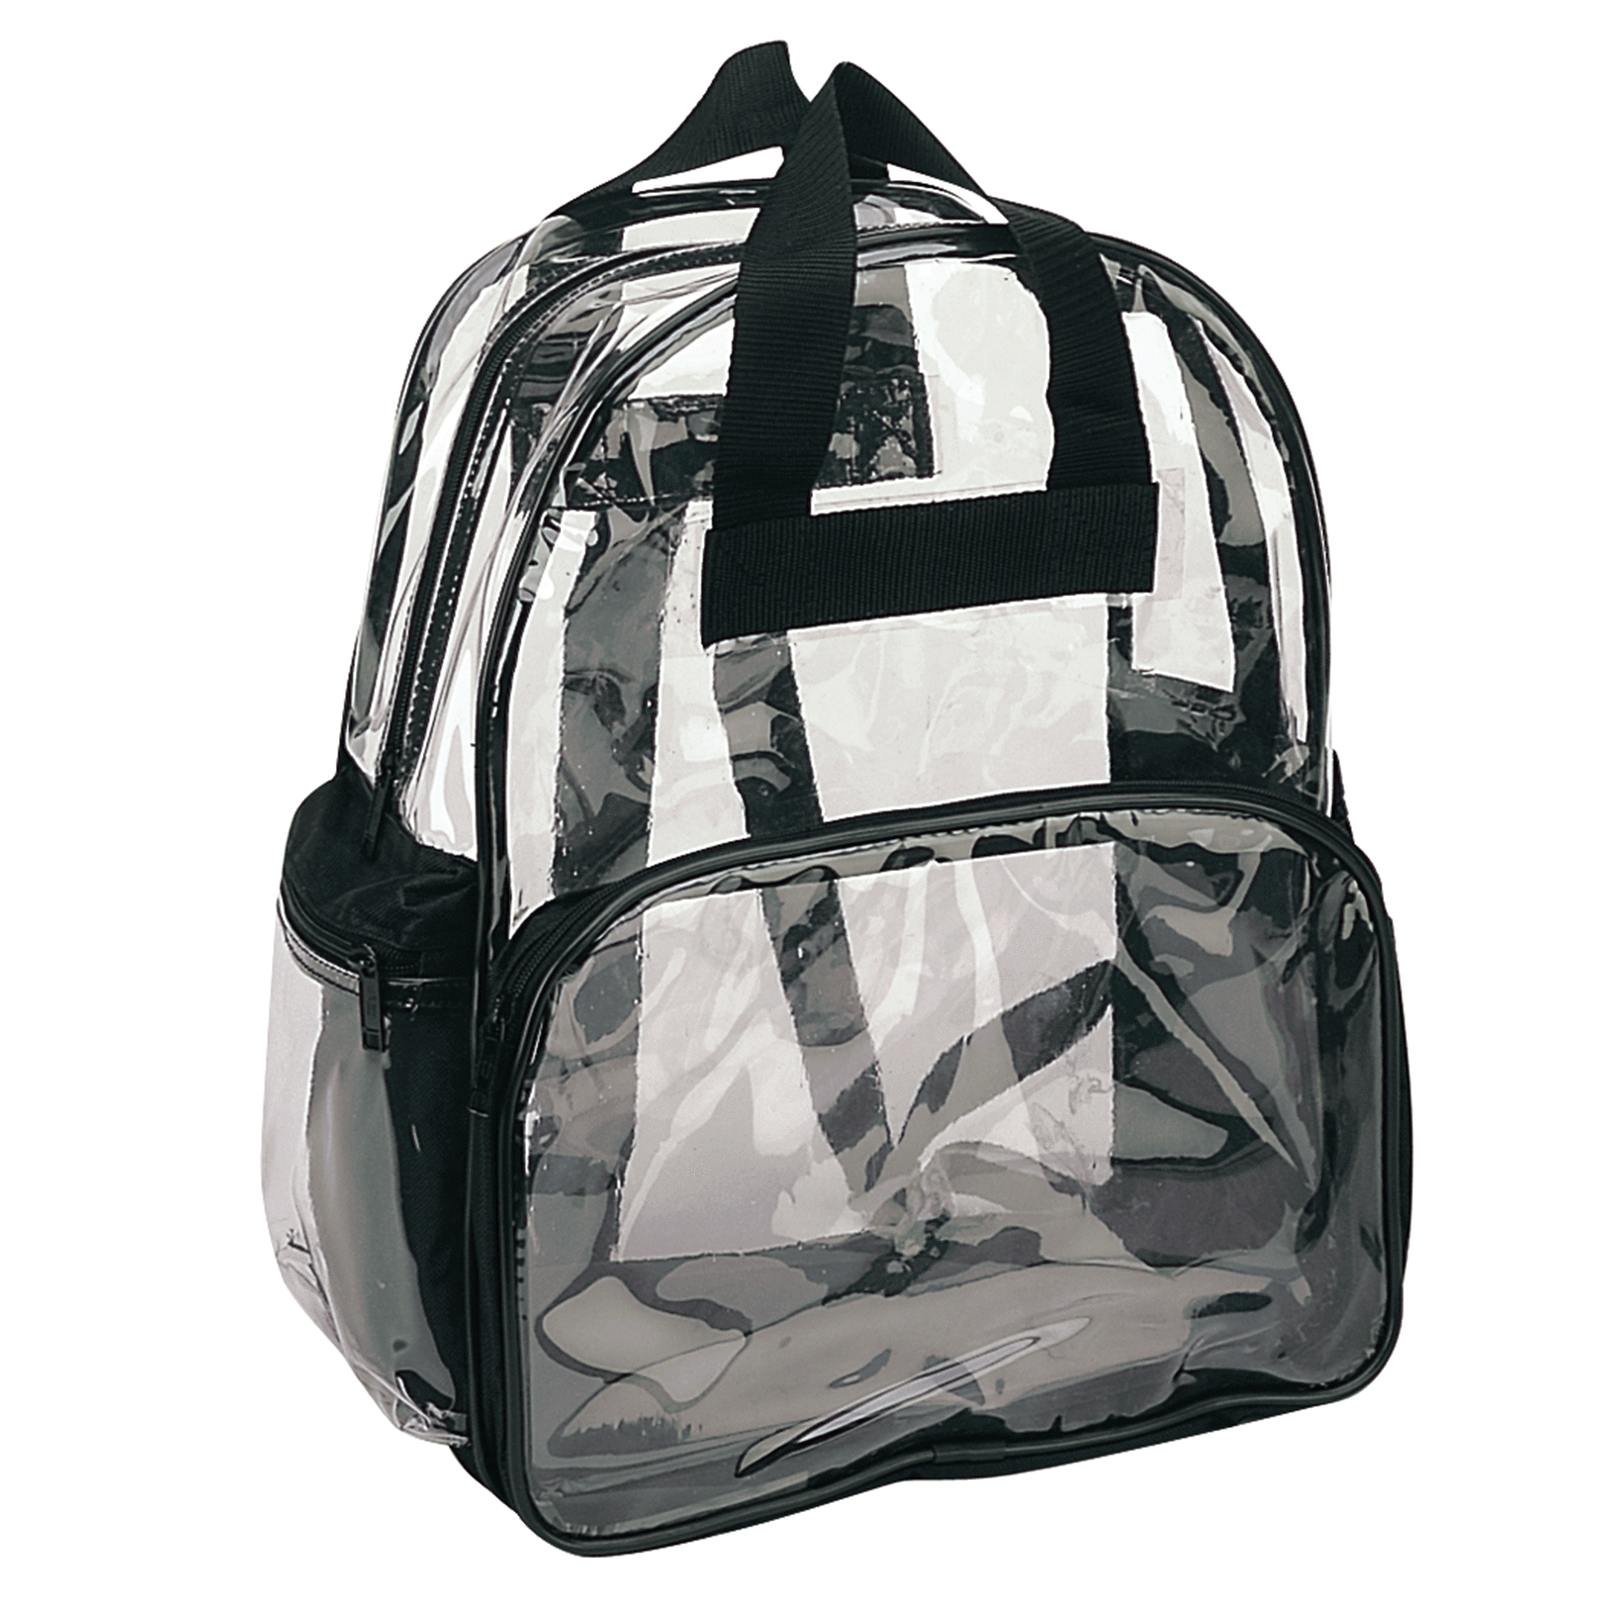 Clear Transparent Backpack Book Bag School Stadium Security Tsa Rally